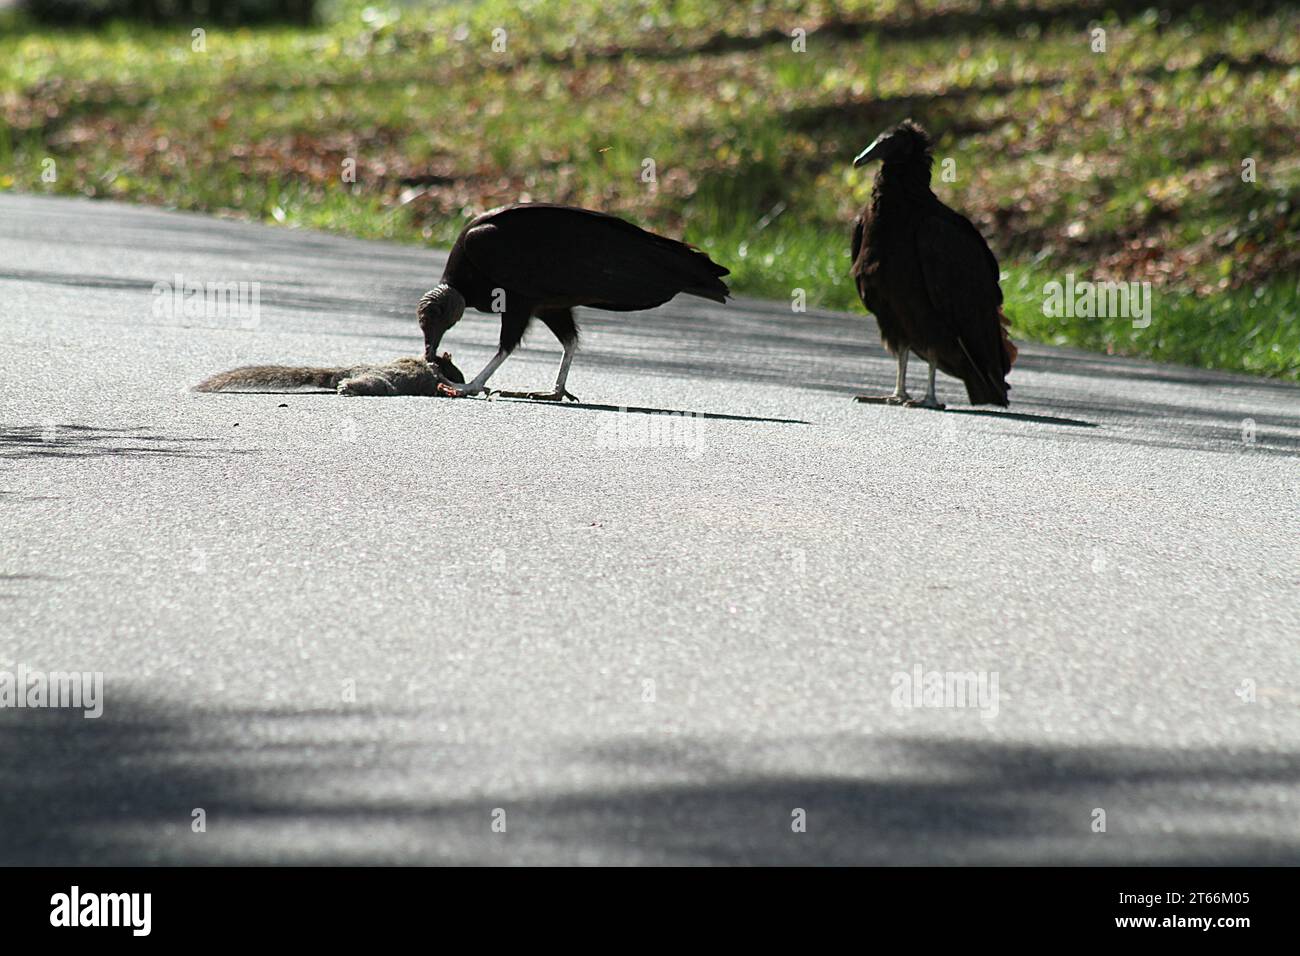 Turkey vultures feeding on a run-over squirrel on a neighborhood street in Virginia U.S.A. Stock Photo